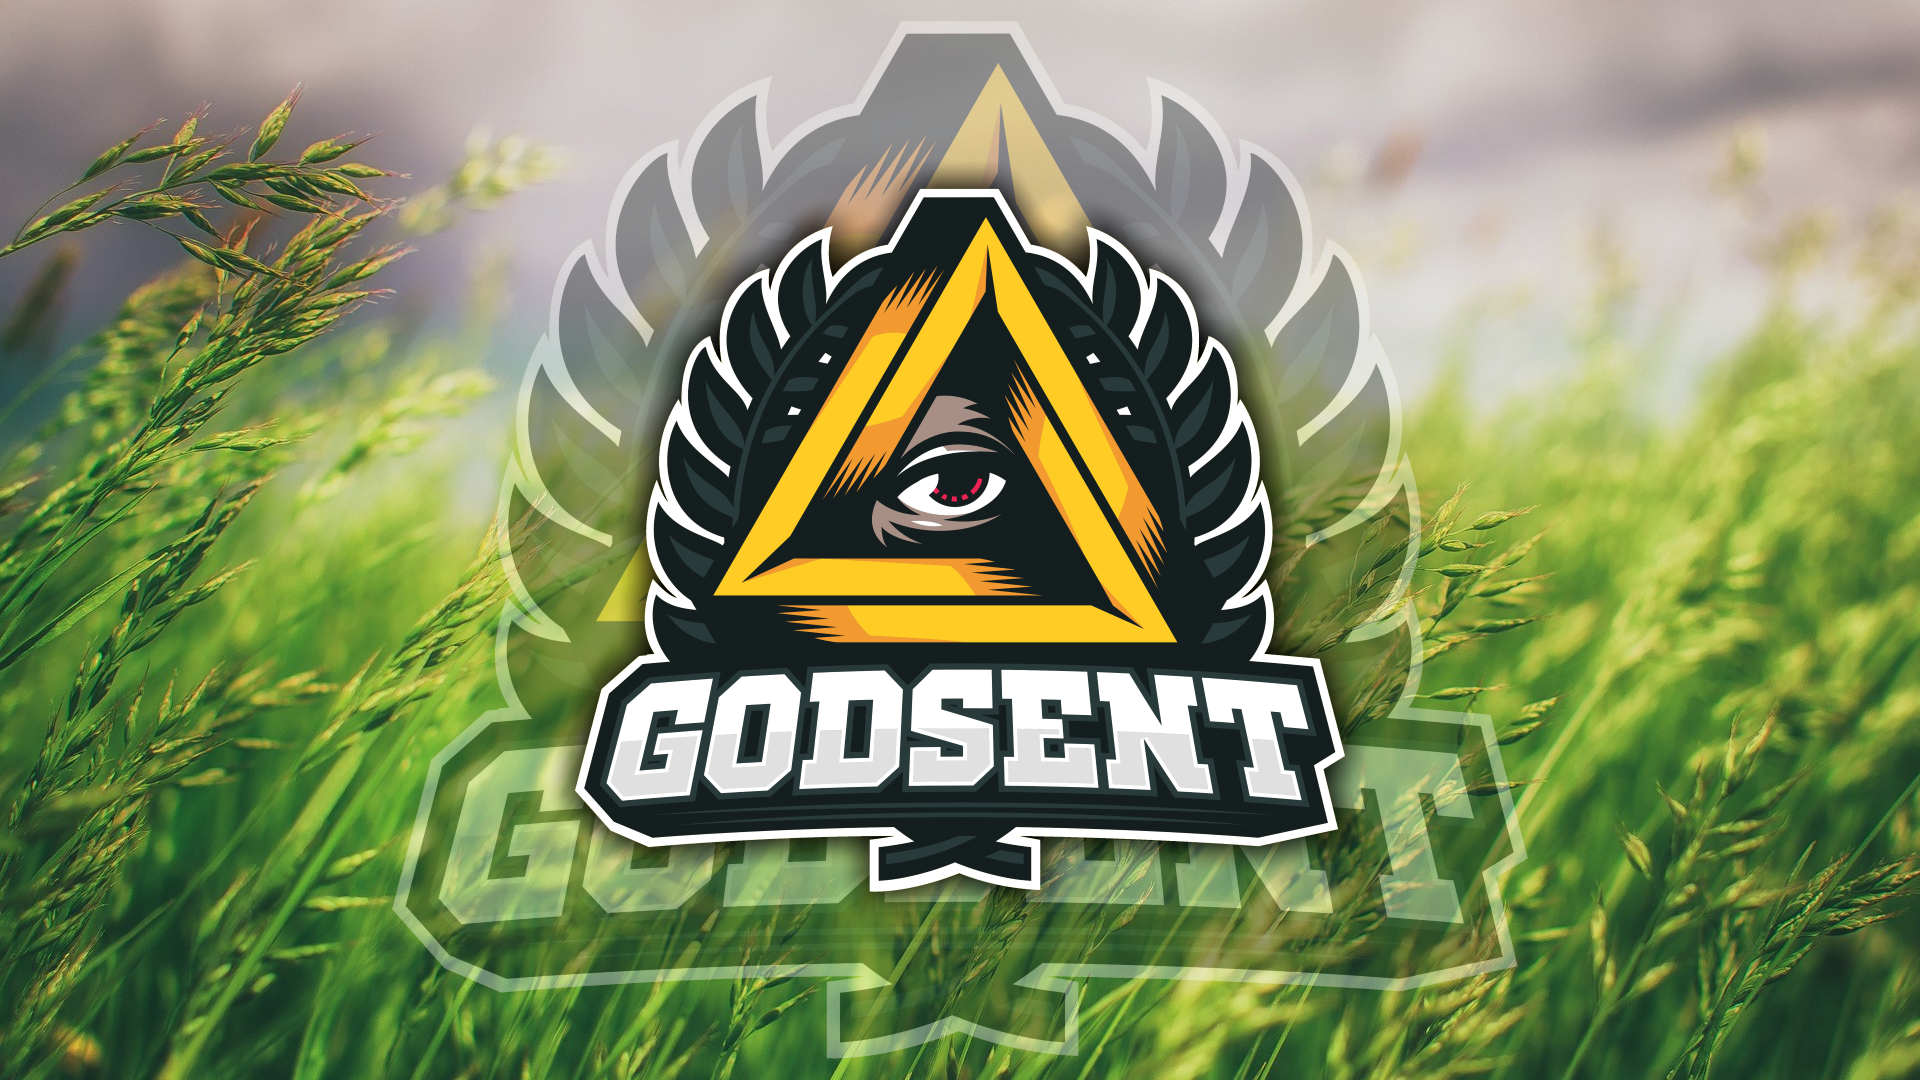 General 1920x1080 Counter-Strike: Global Offensive GODSENT Eye of Providence PC gaming logo